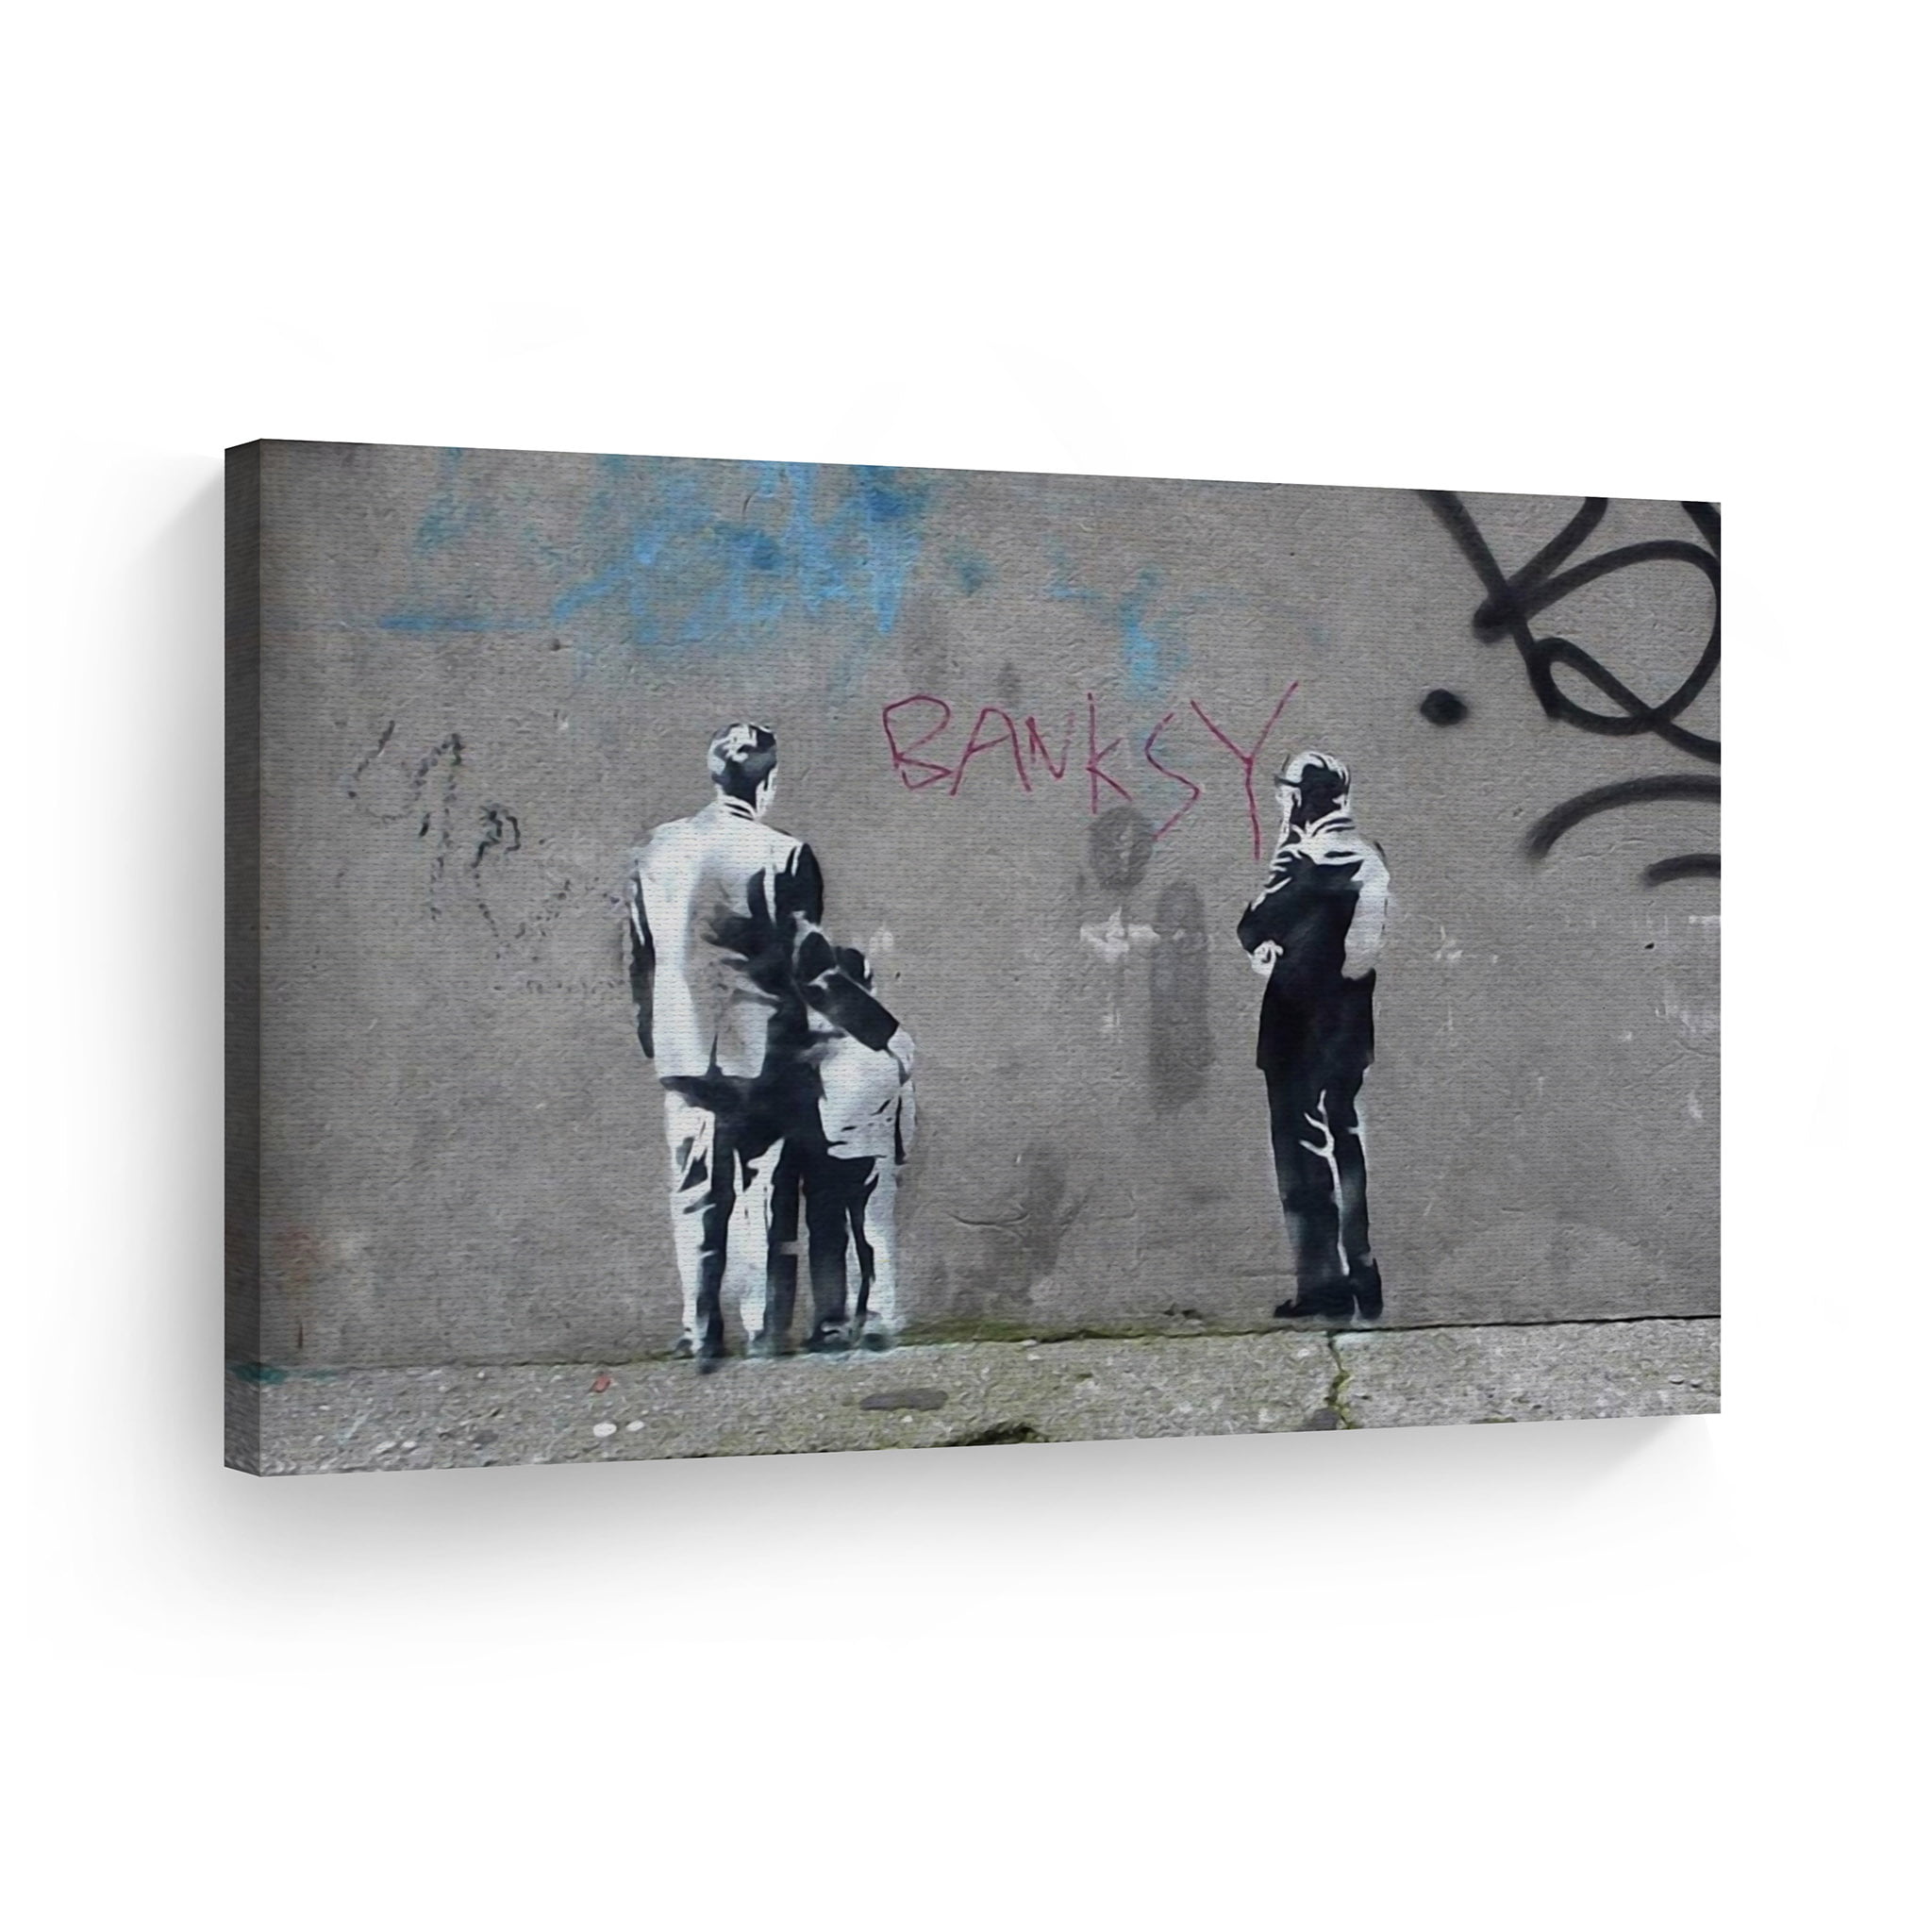 Banksy girl karma quote poster print  glass frame 36" x24" street art painting 